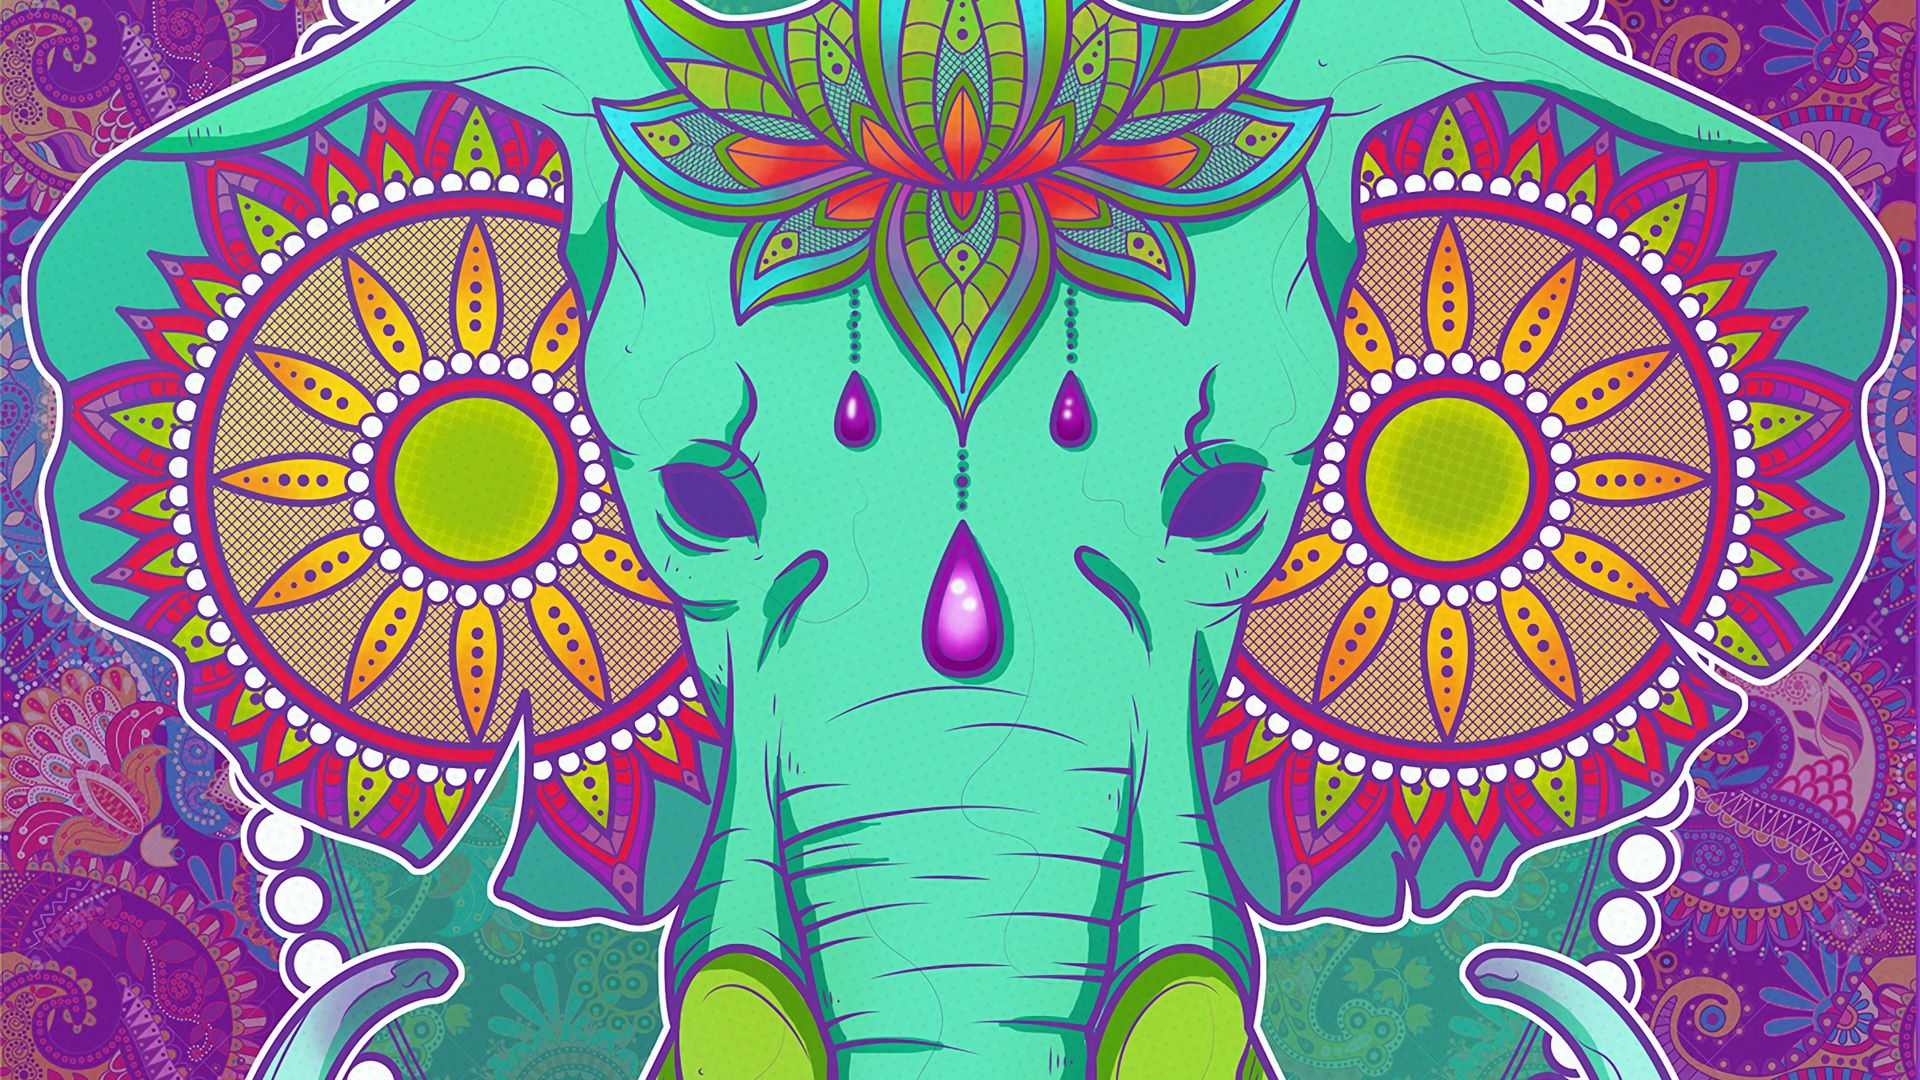 Download wallpaper 1920x1080 ganesha, god, elephant, patterns, colorful,  art full hd, hdtv, fhd, 1080p hd background